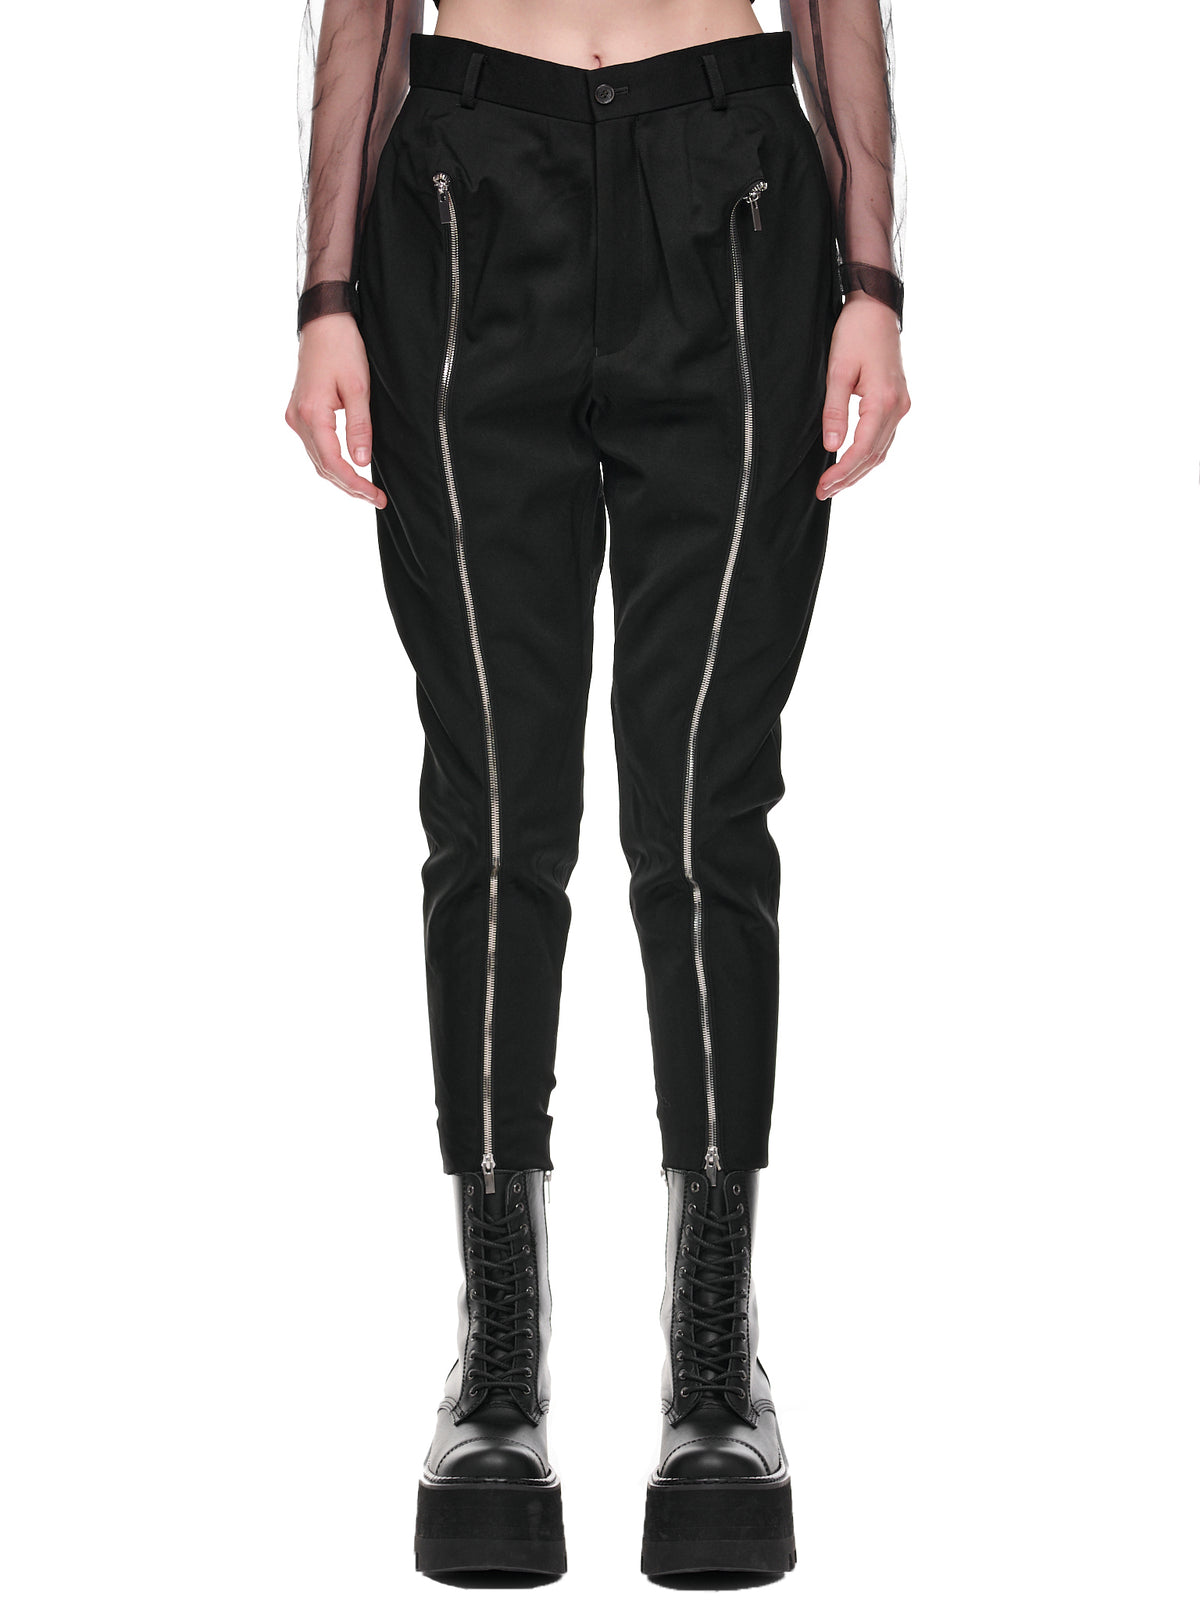 Zip Trousers (3J-P001-051-BLACK)